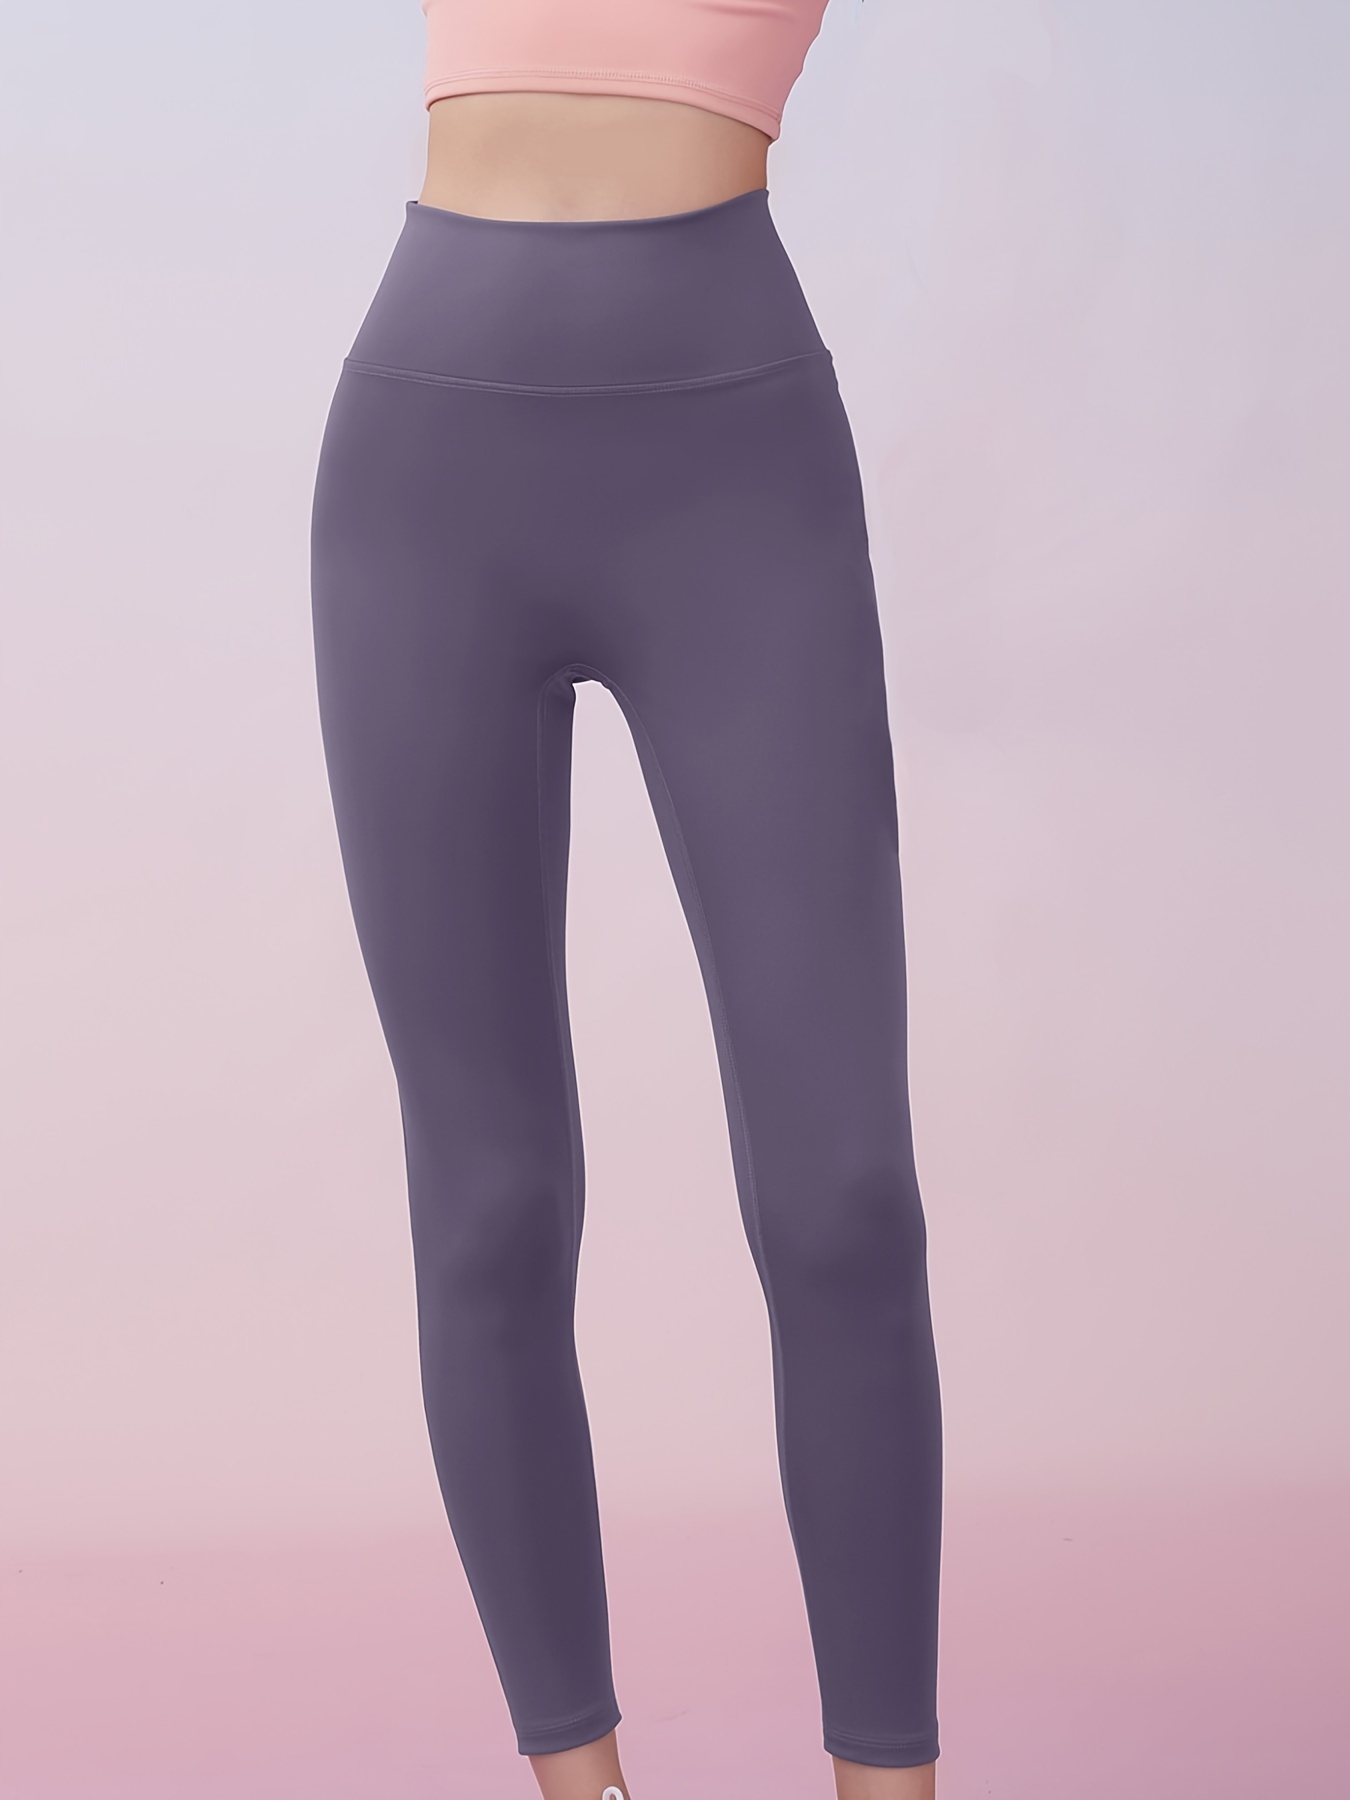 Women's Yoga Pants Side Pockets Mesh Tummy Control Butt Lift High Waist Yoga  Fitness Gym Workout Leggings Bottoms Black Dark Purple Army Green Sports